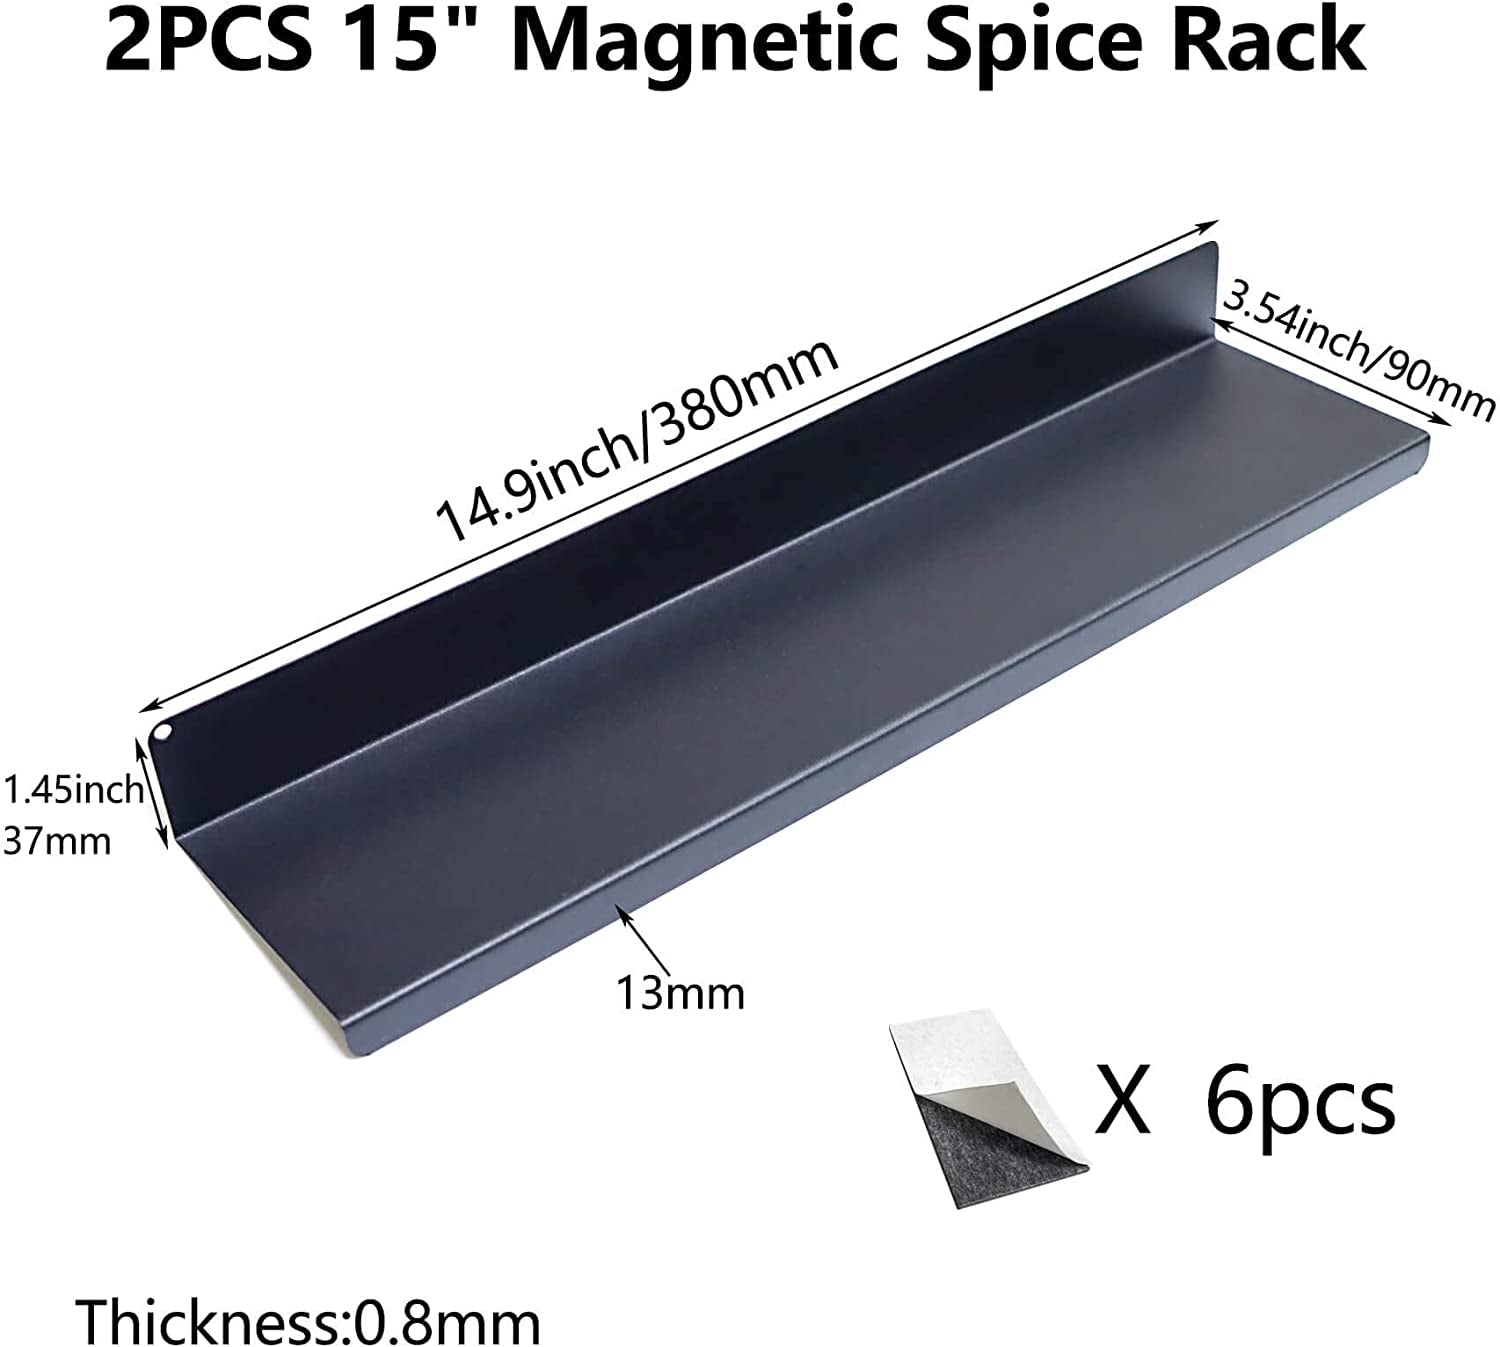 2PCS 15" Magnetic Stove Shelf for Kitchen